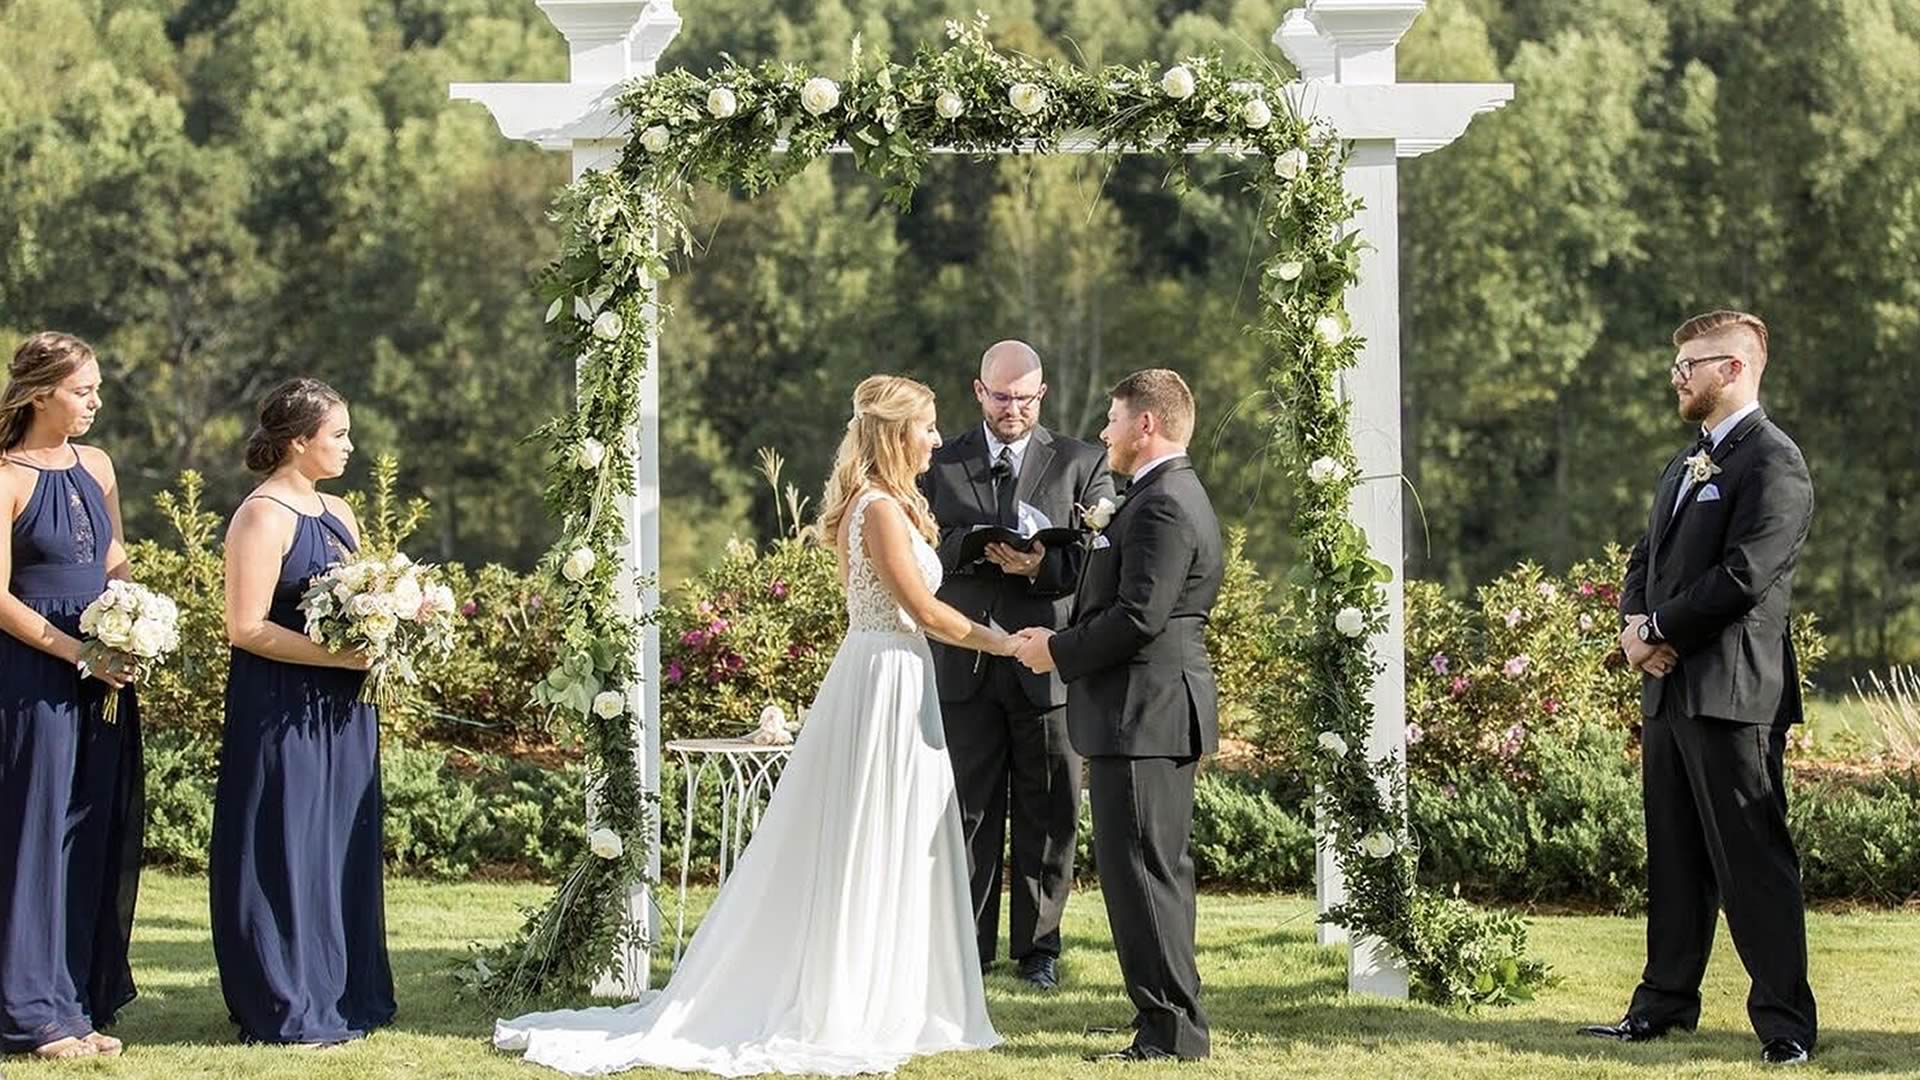 Atlanta Wedding Officiants - Sensational Ceremonies